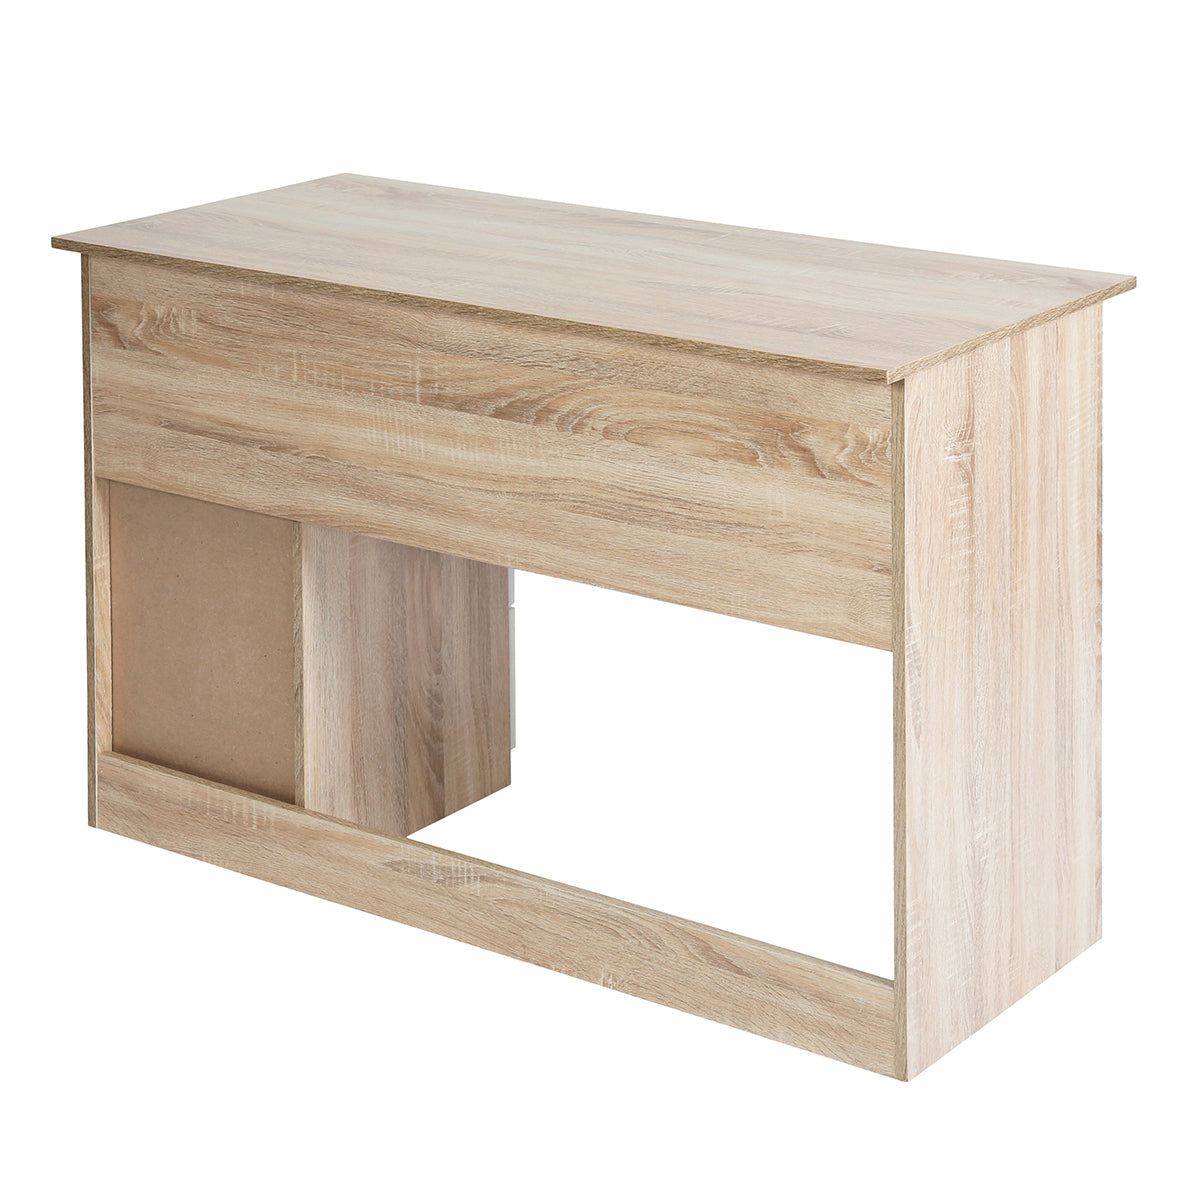 43.3”Wood Corner Writing Table with Shelf 3 Drawers Storage